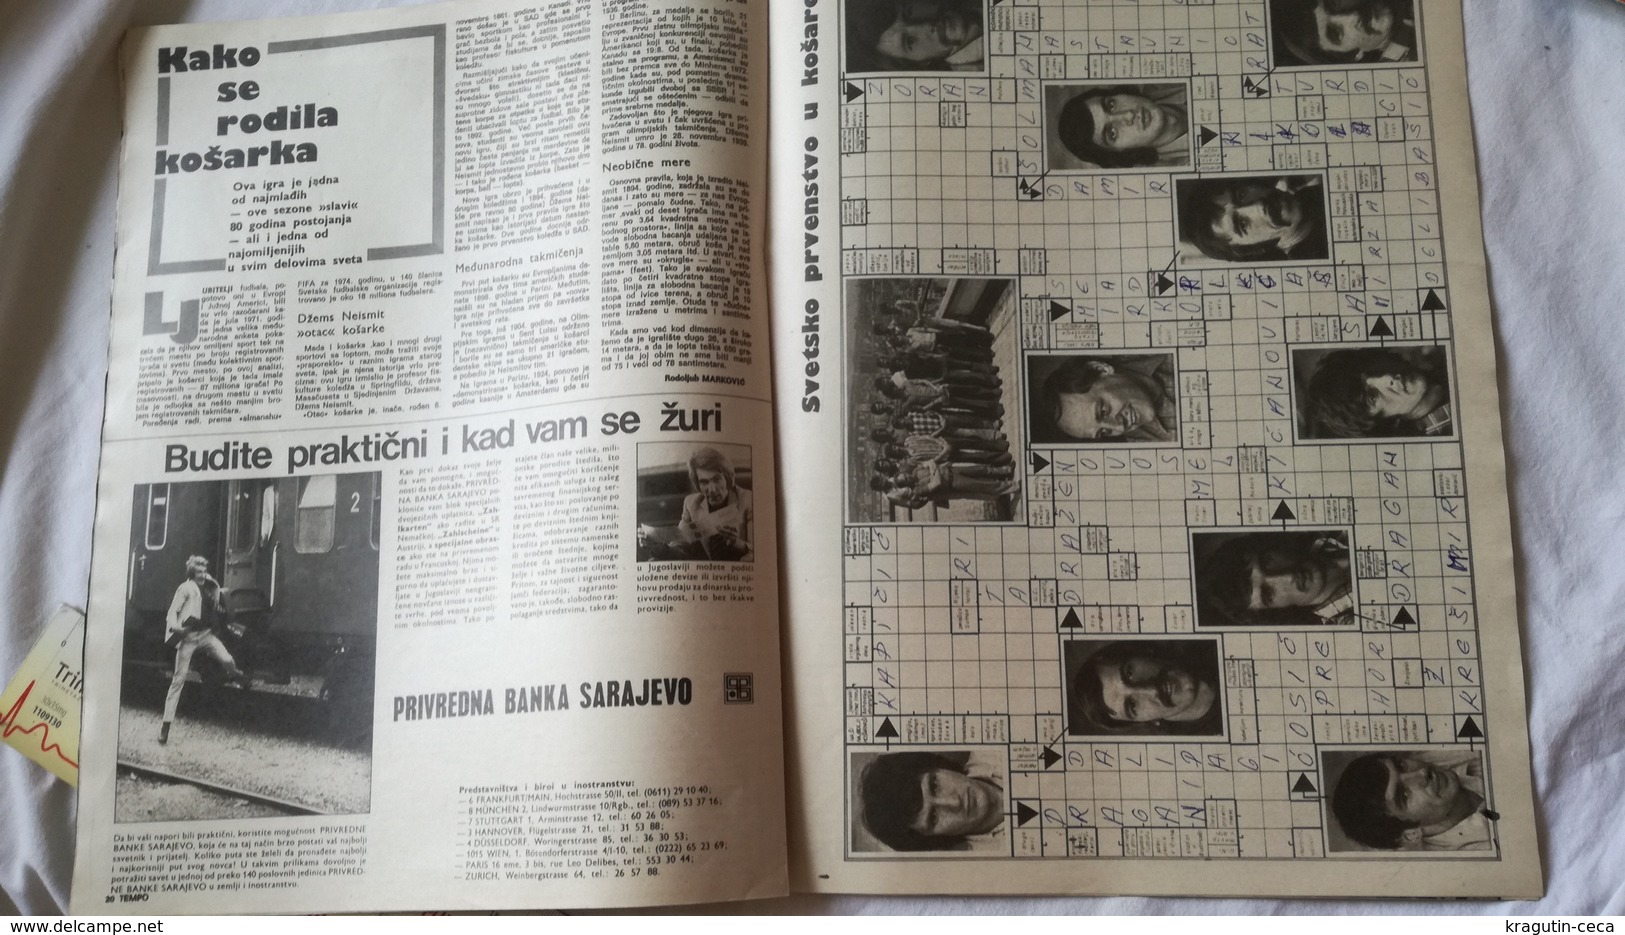 1974 TEMPO YUGOSLAVIA SERBIA SPORT FOOTBALL MAGAZINE NEWSPAPER WM74 CHAMPIONSHIP DZAJIC FOGST MUNDIAL RIJEKA Johan Johan - Sport